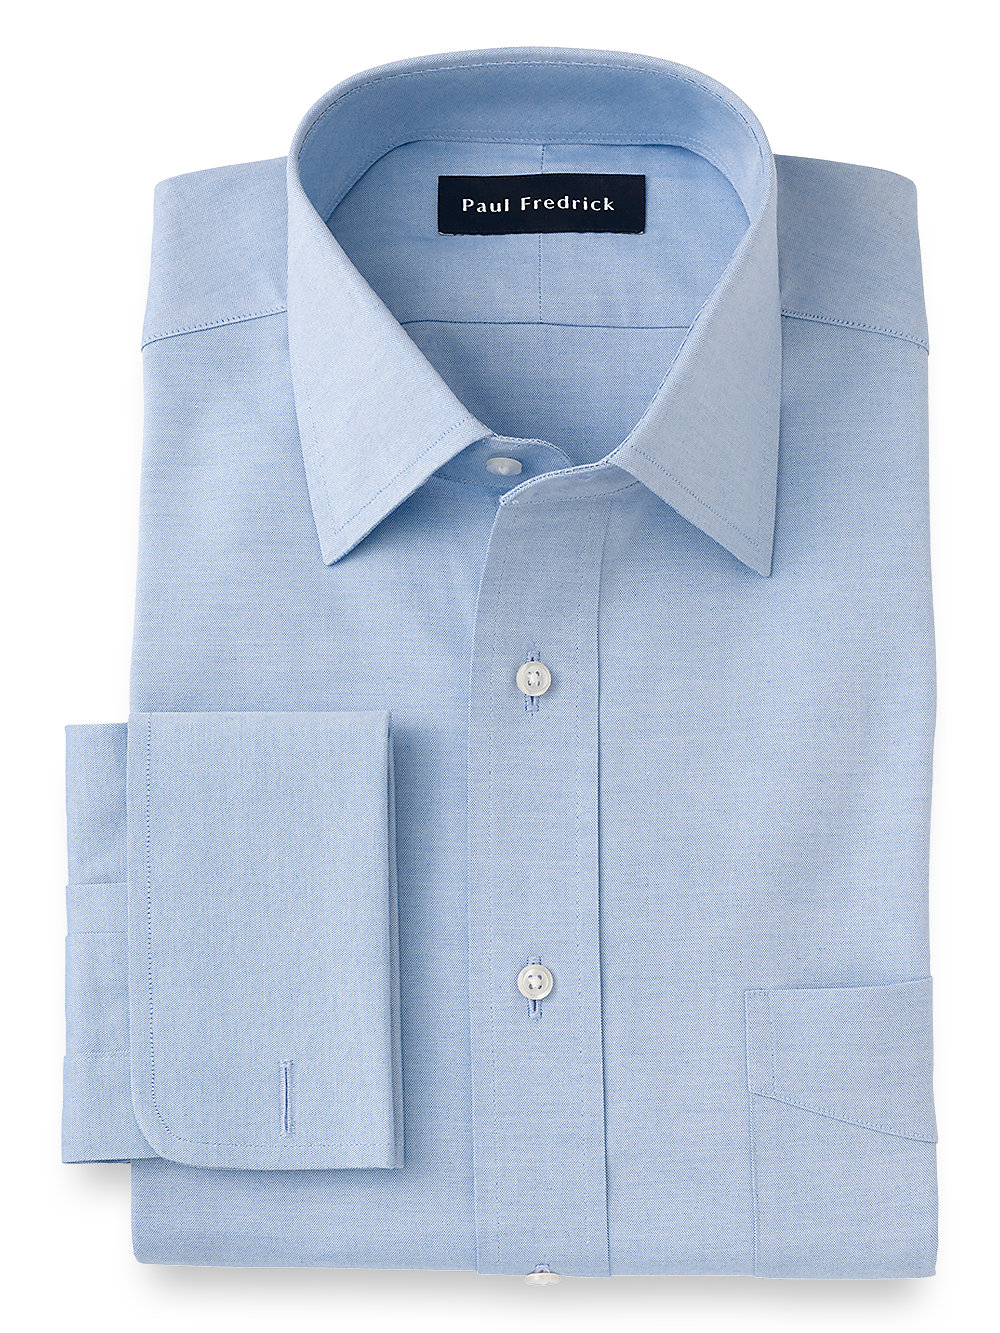 Paul Fredrick Mens Slim Fit Pinpoint Spread Collar Dress Shirt 